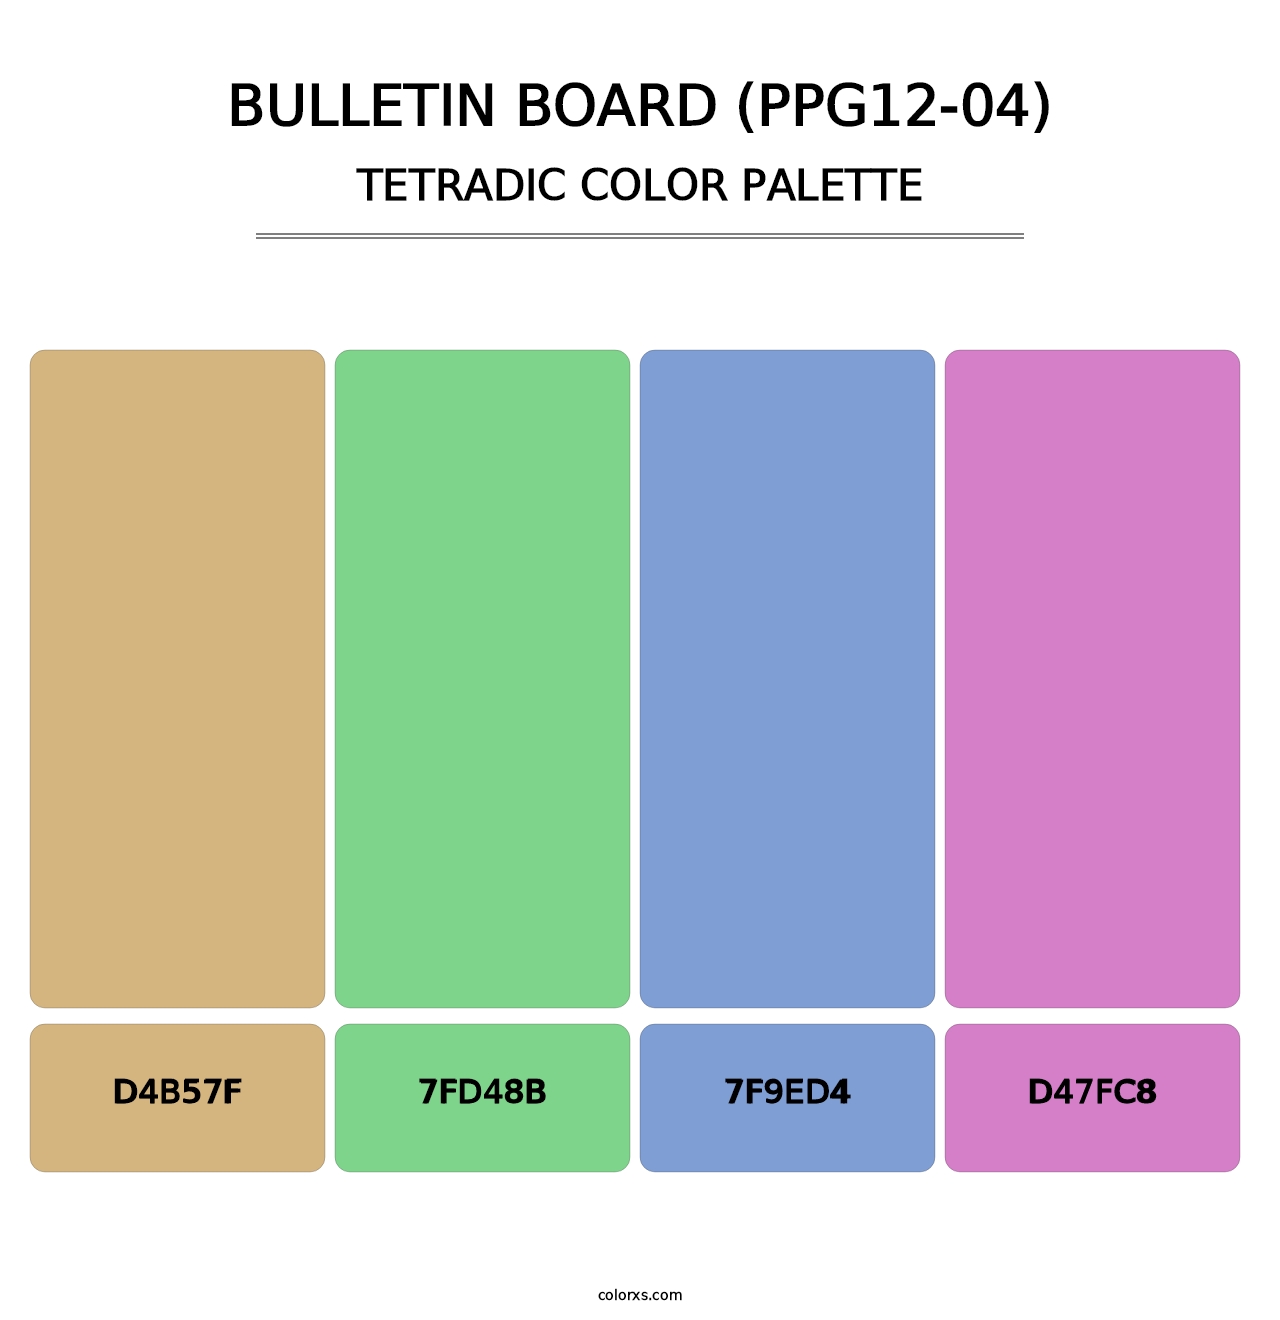 Bulletin Board (PPG12-04) - Tetradic Color Palette